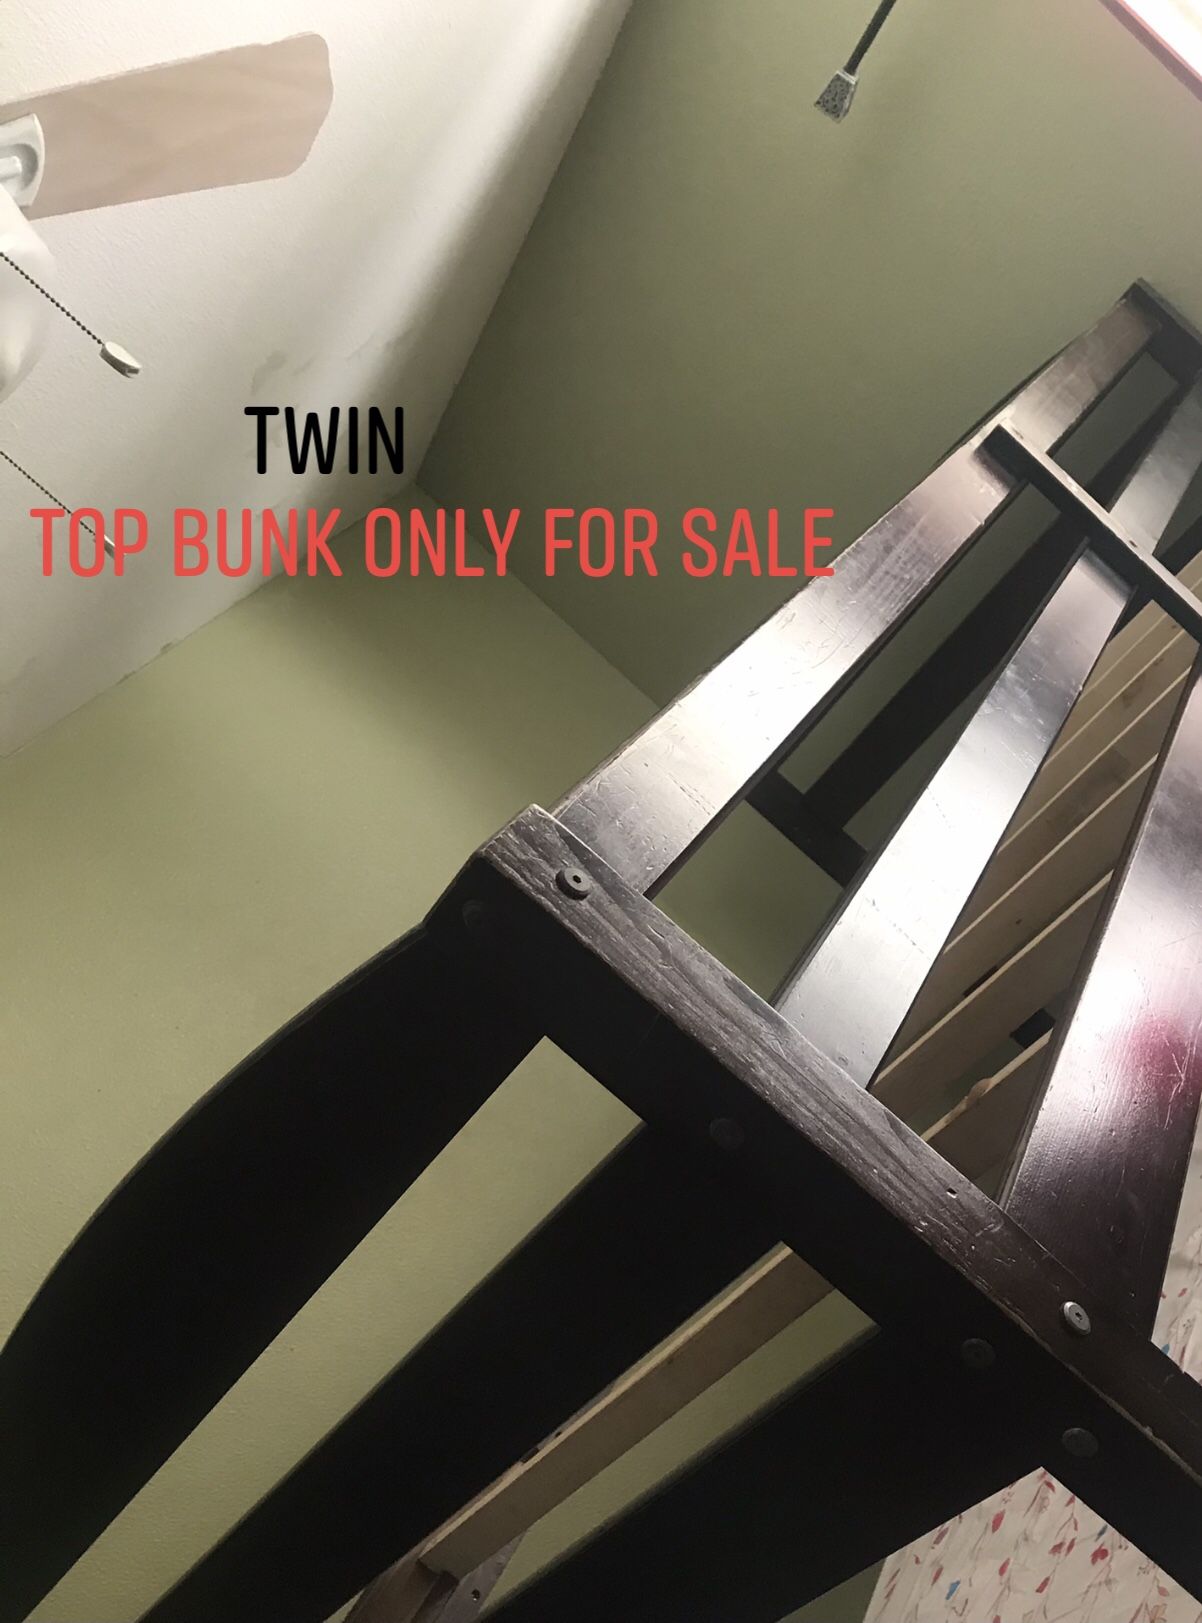 Twin top bunk